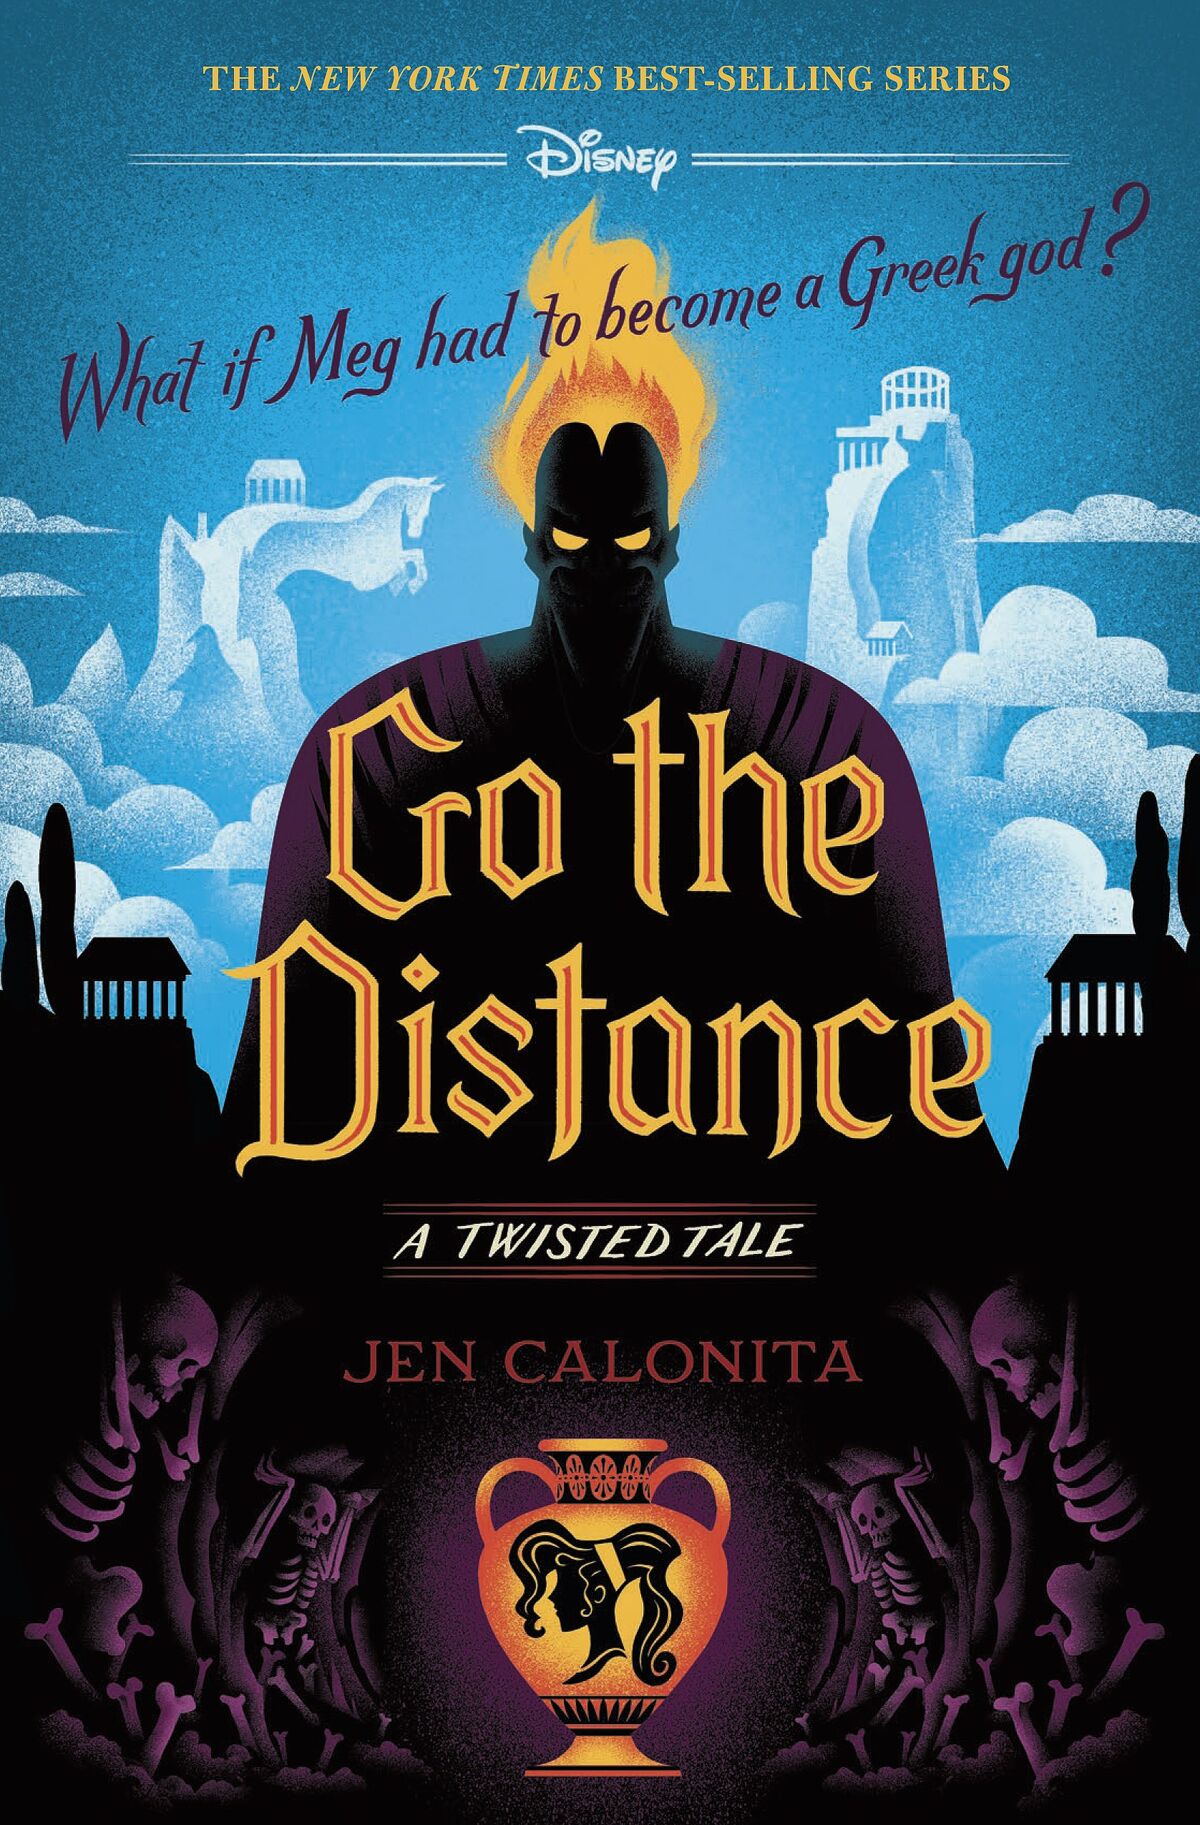 A Twisted Tale Jen Calonita книга. Jen Calonita a Twisted Tale. Go the distance. Twisted Tales. A twisted tale